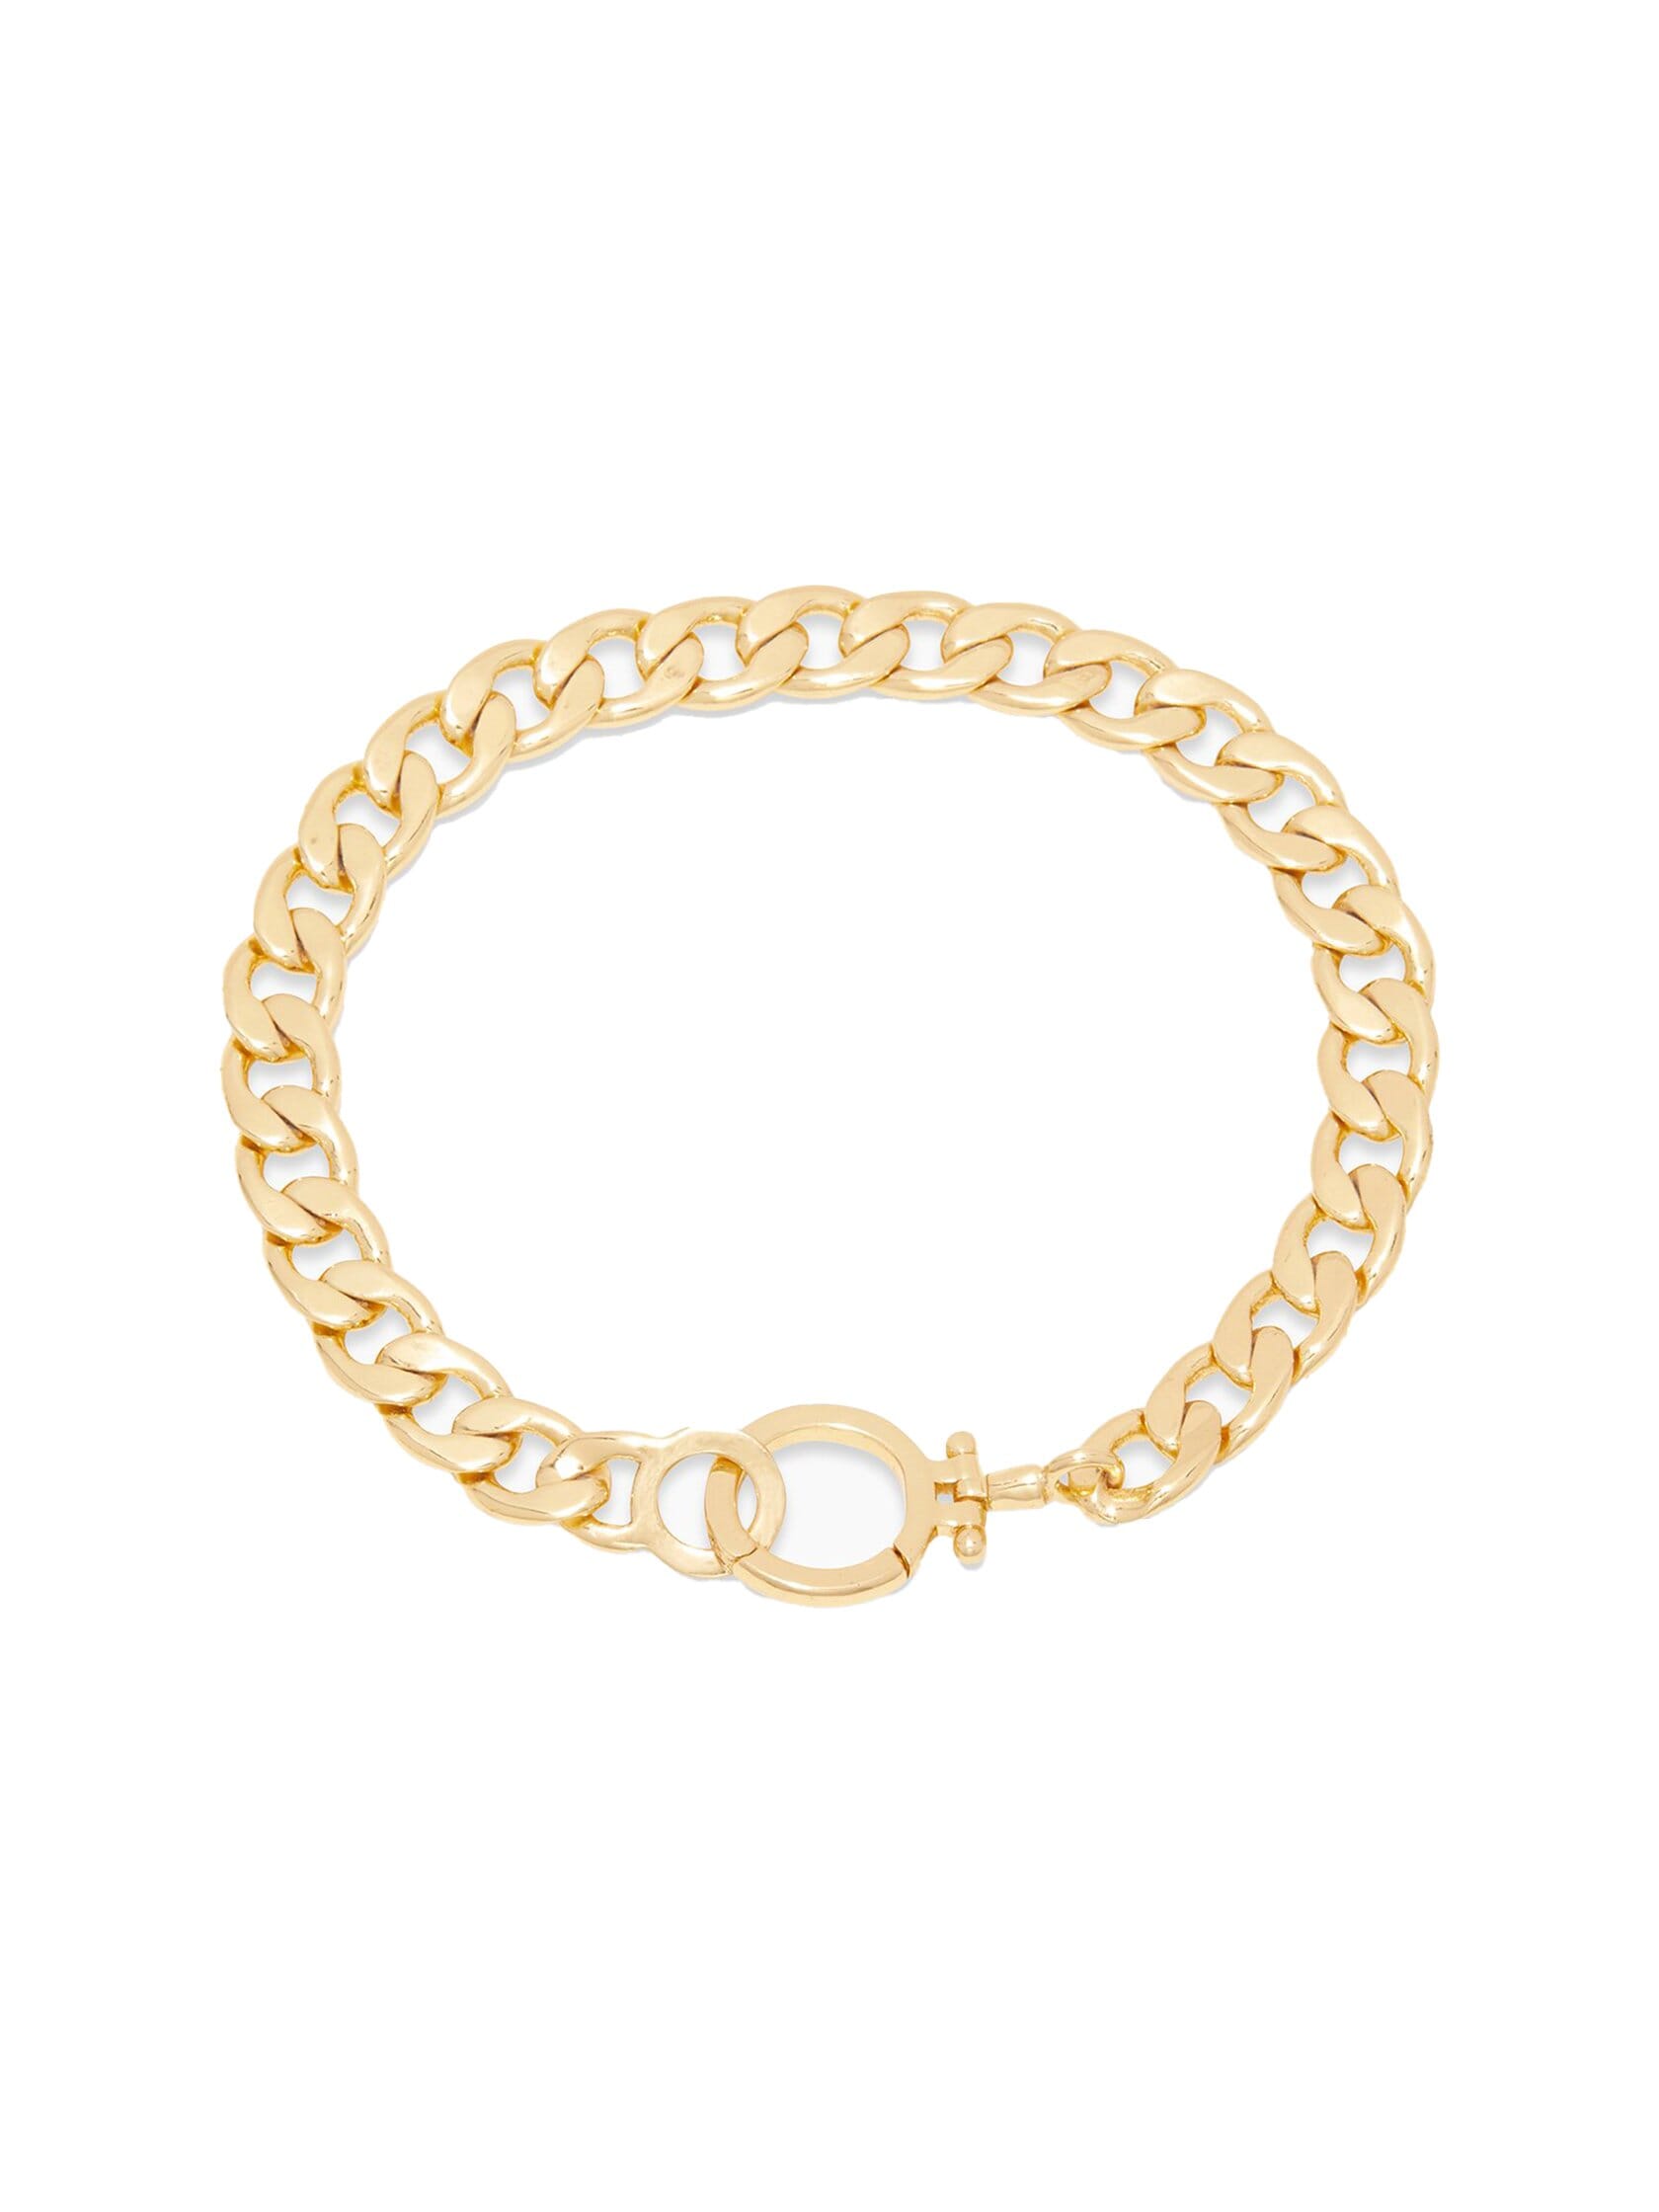 Gorjana | Wilder Chain Bracelet in Gold | FashionPass